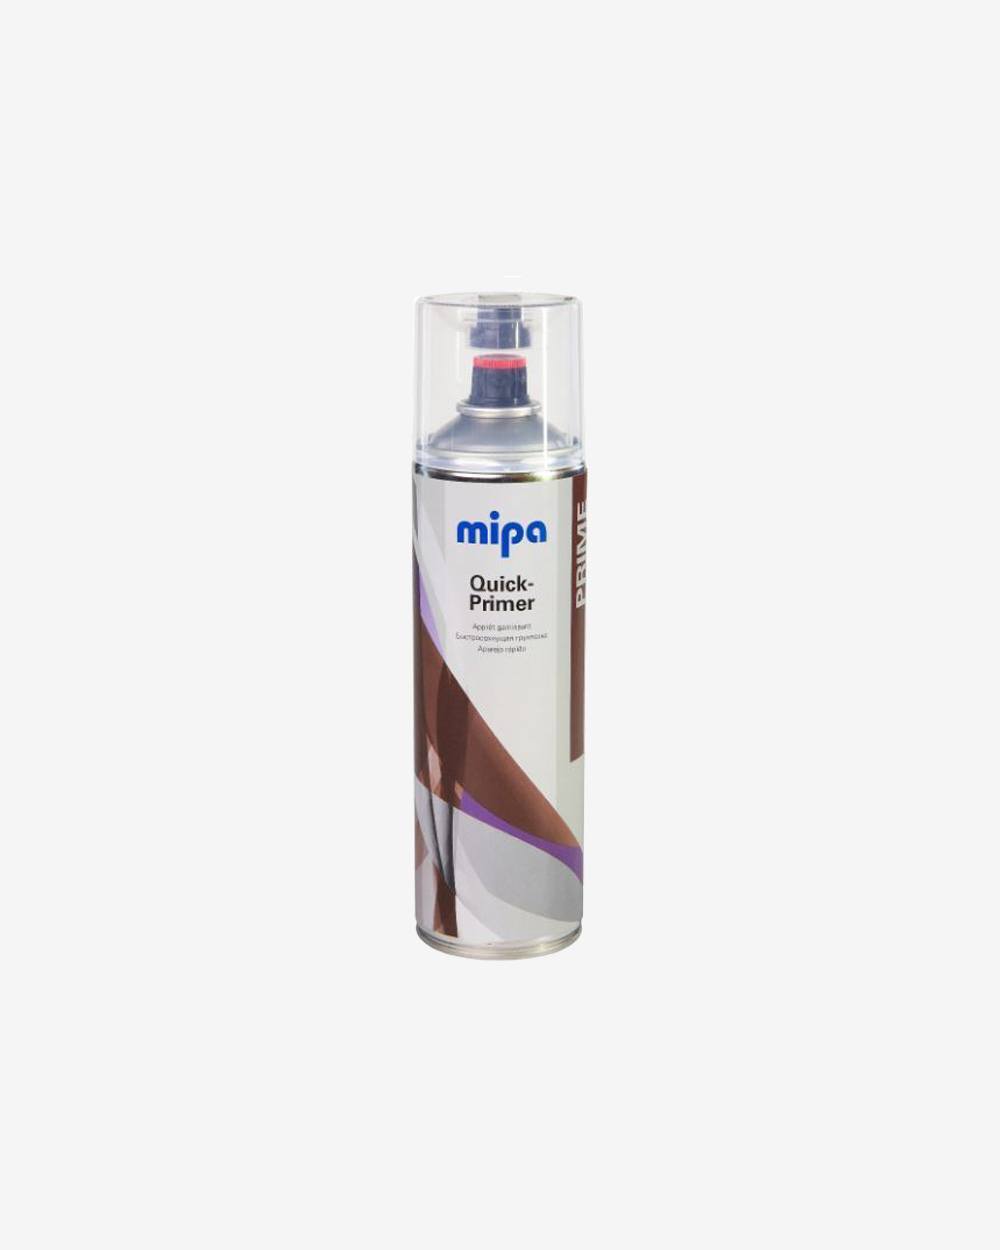 Se Mipa Quick Primer Spray, Lys Grå hos Picment.dk